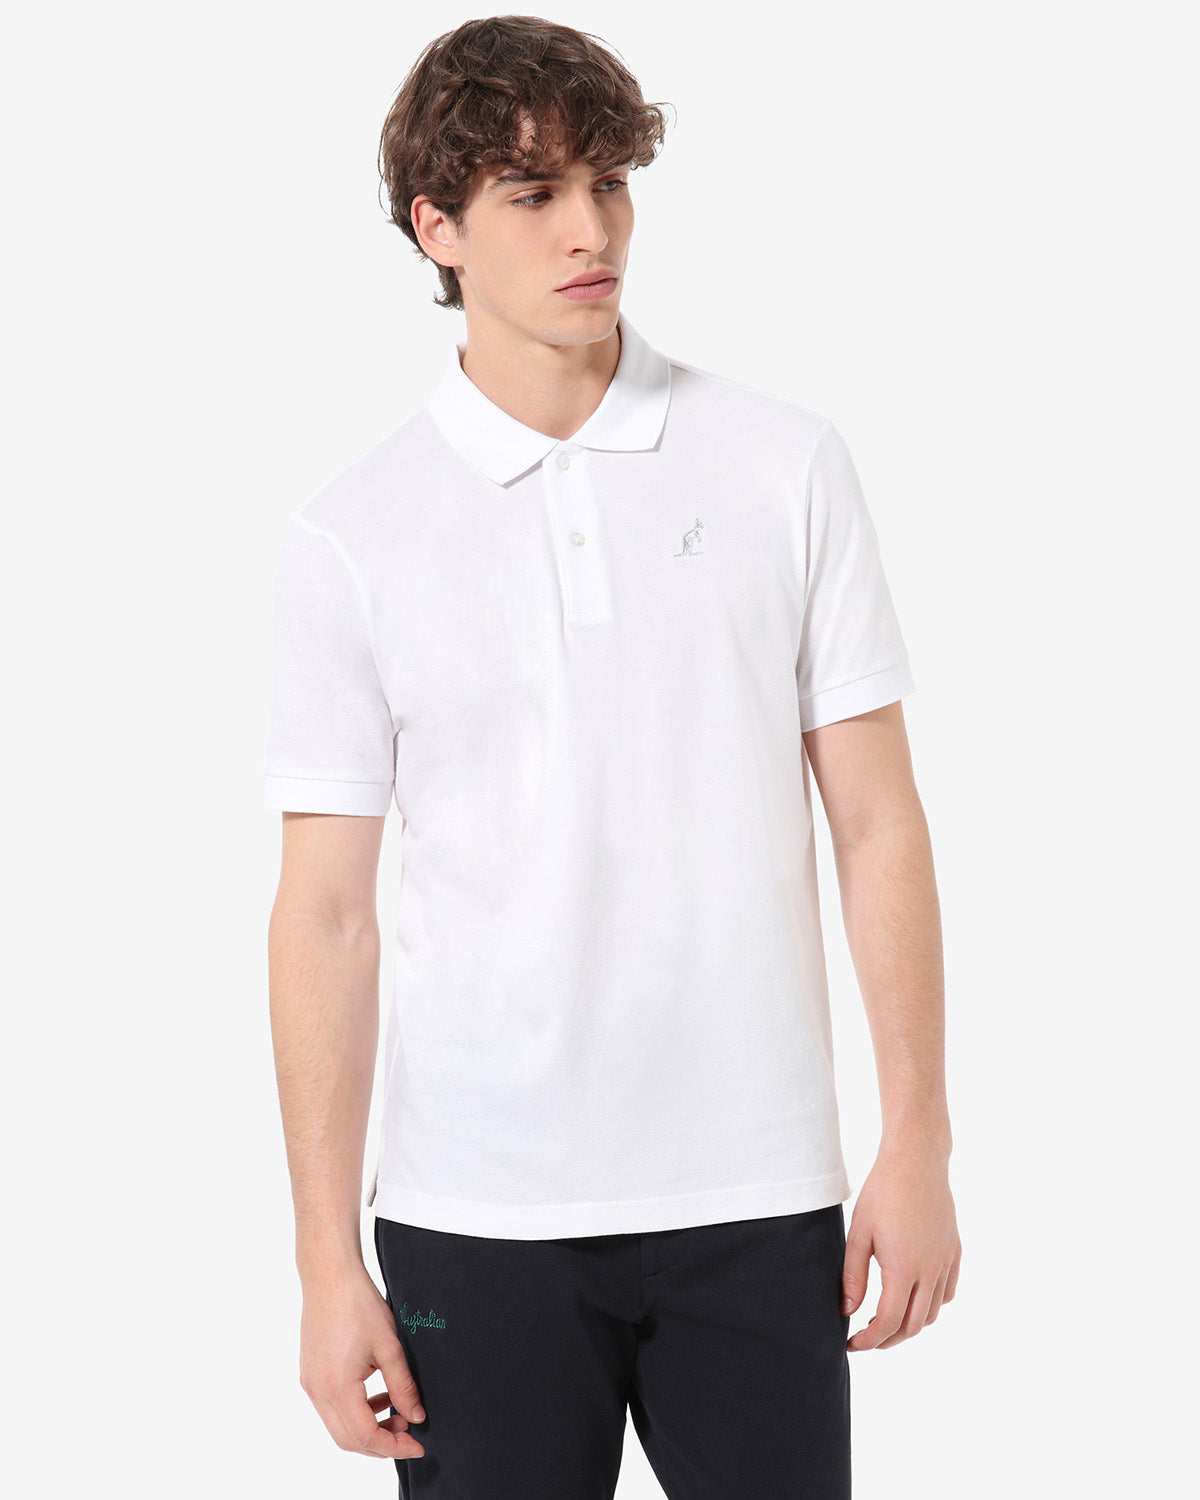 Basic Pique Polo Shirt: Australian Sportswear